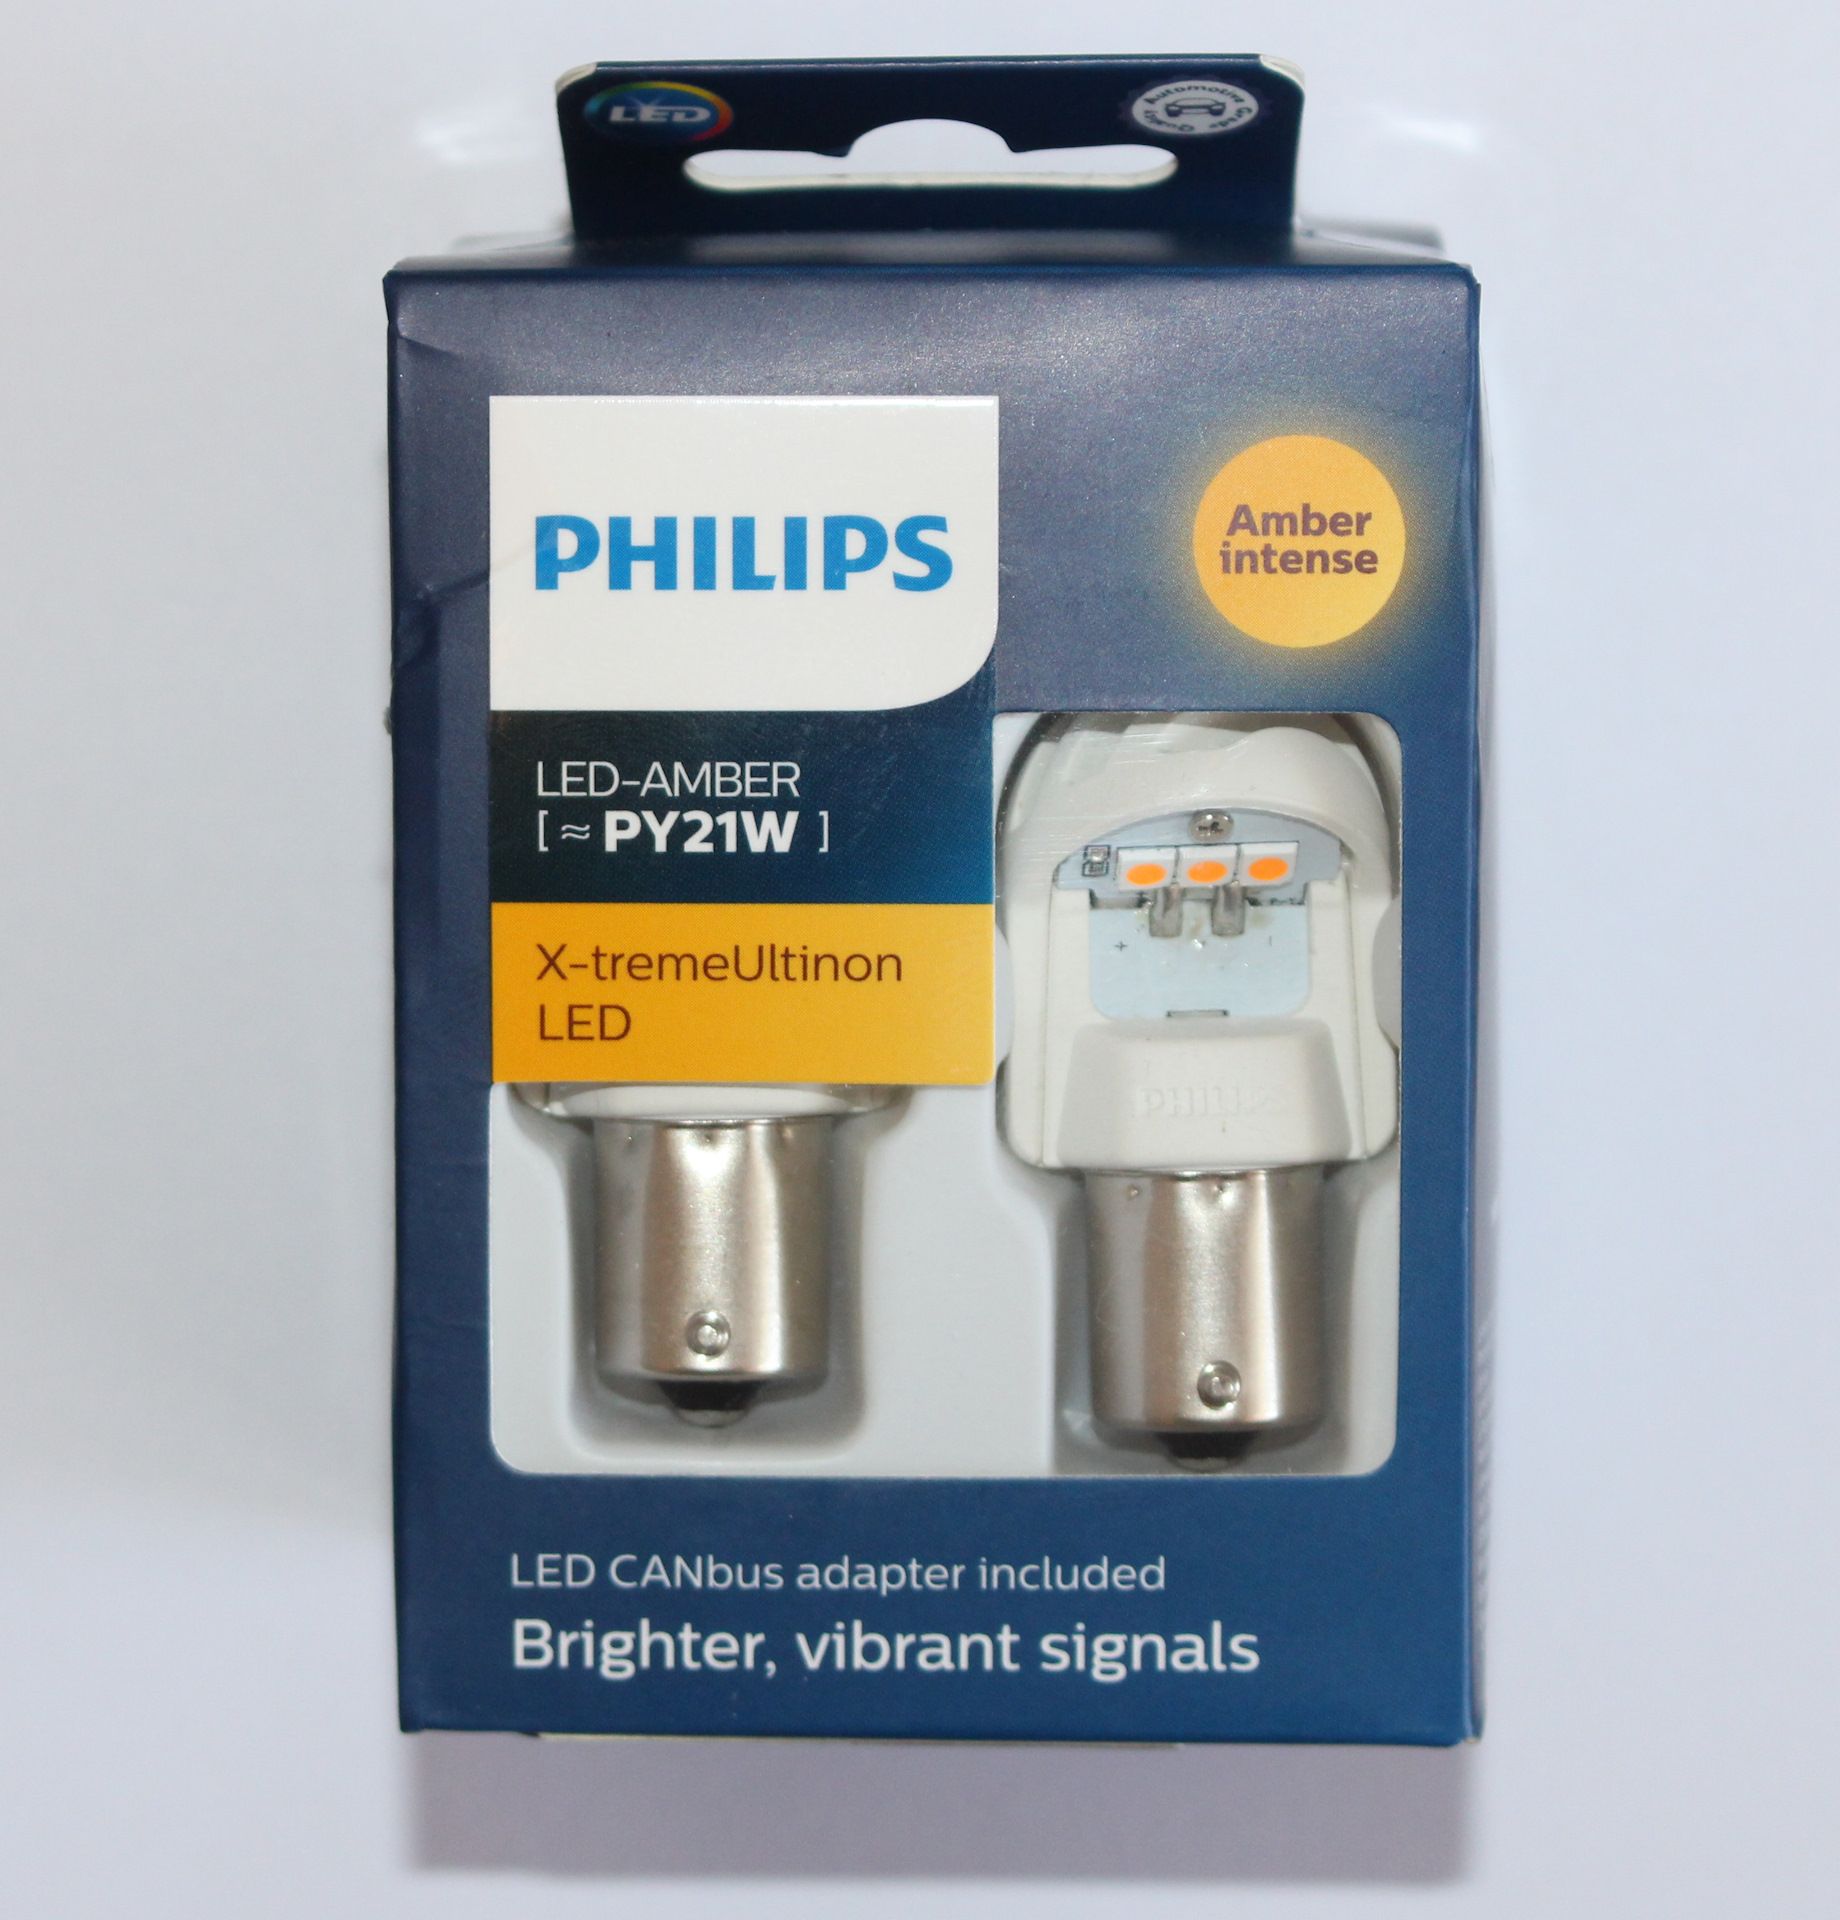 Led philips 12v. Лампа p21w светодиодная Филипс. Ветодиодные лампы p21w Philips x-TREMEULTINON led gen2 белые - 11498xuwx2 (2 шт.). Лампы в поворотники Philips py21w. Philips py21w x-TREMEULTINON led.